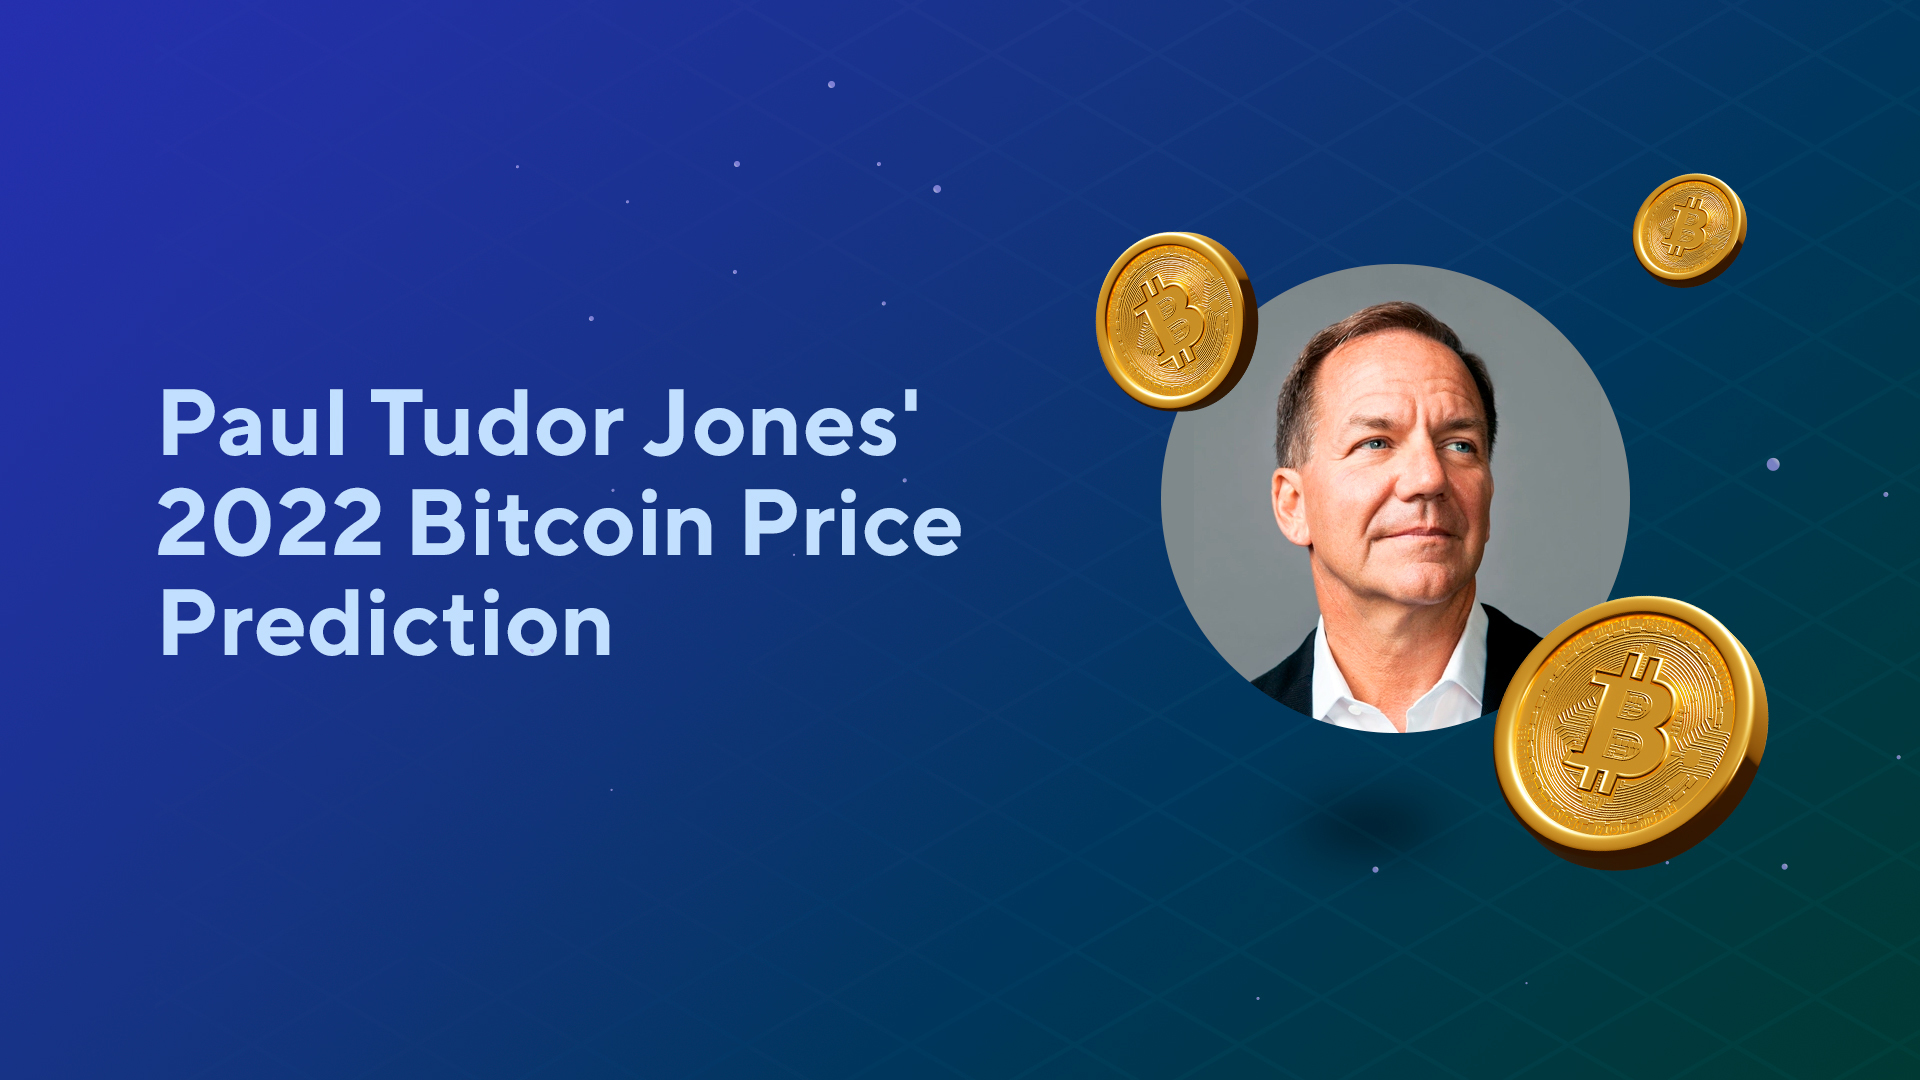 Paul Tudor Jones’ 2022 Bitcoin Price Prediction